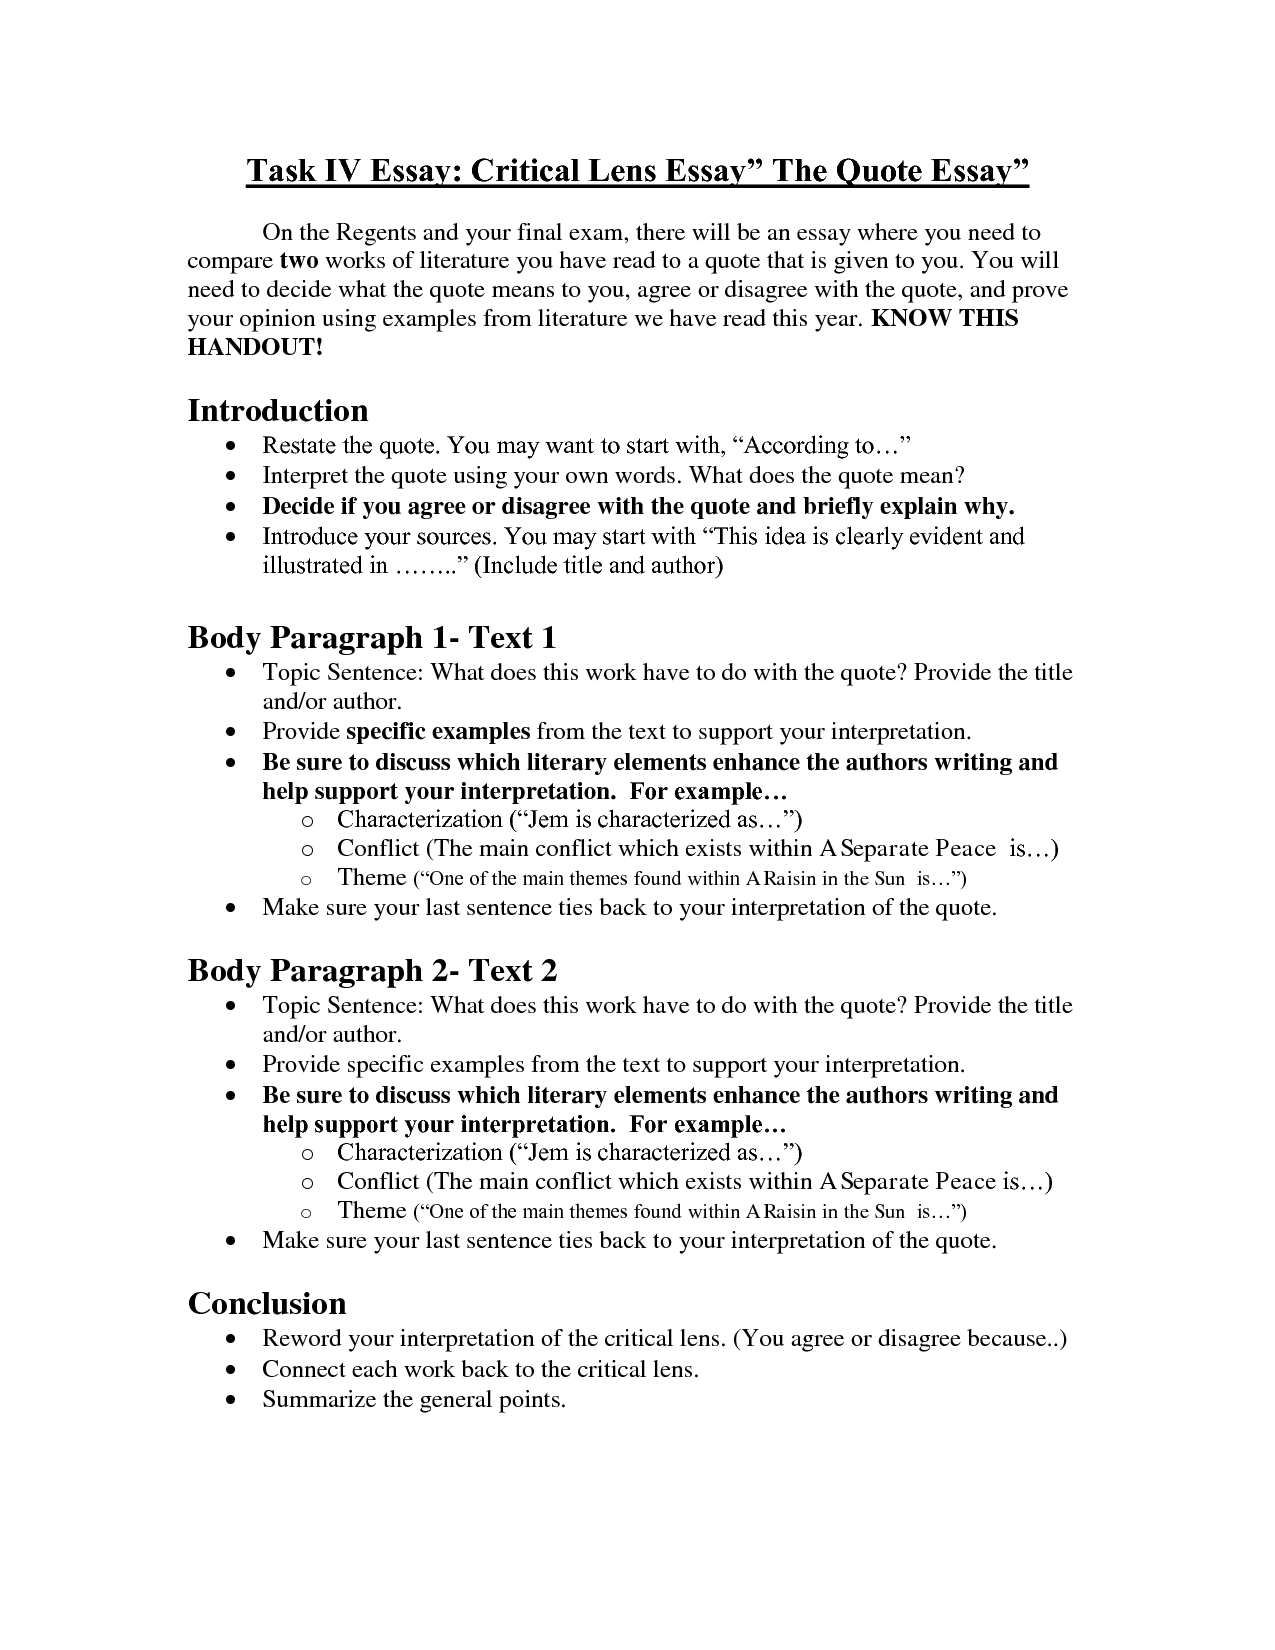 How to write an english regents task ii essay